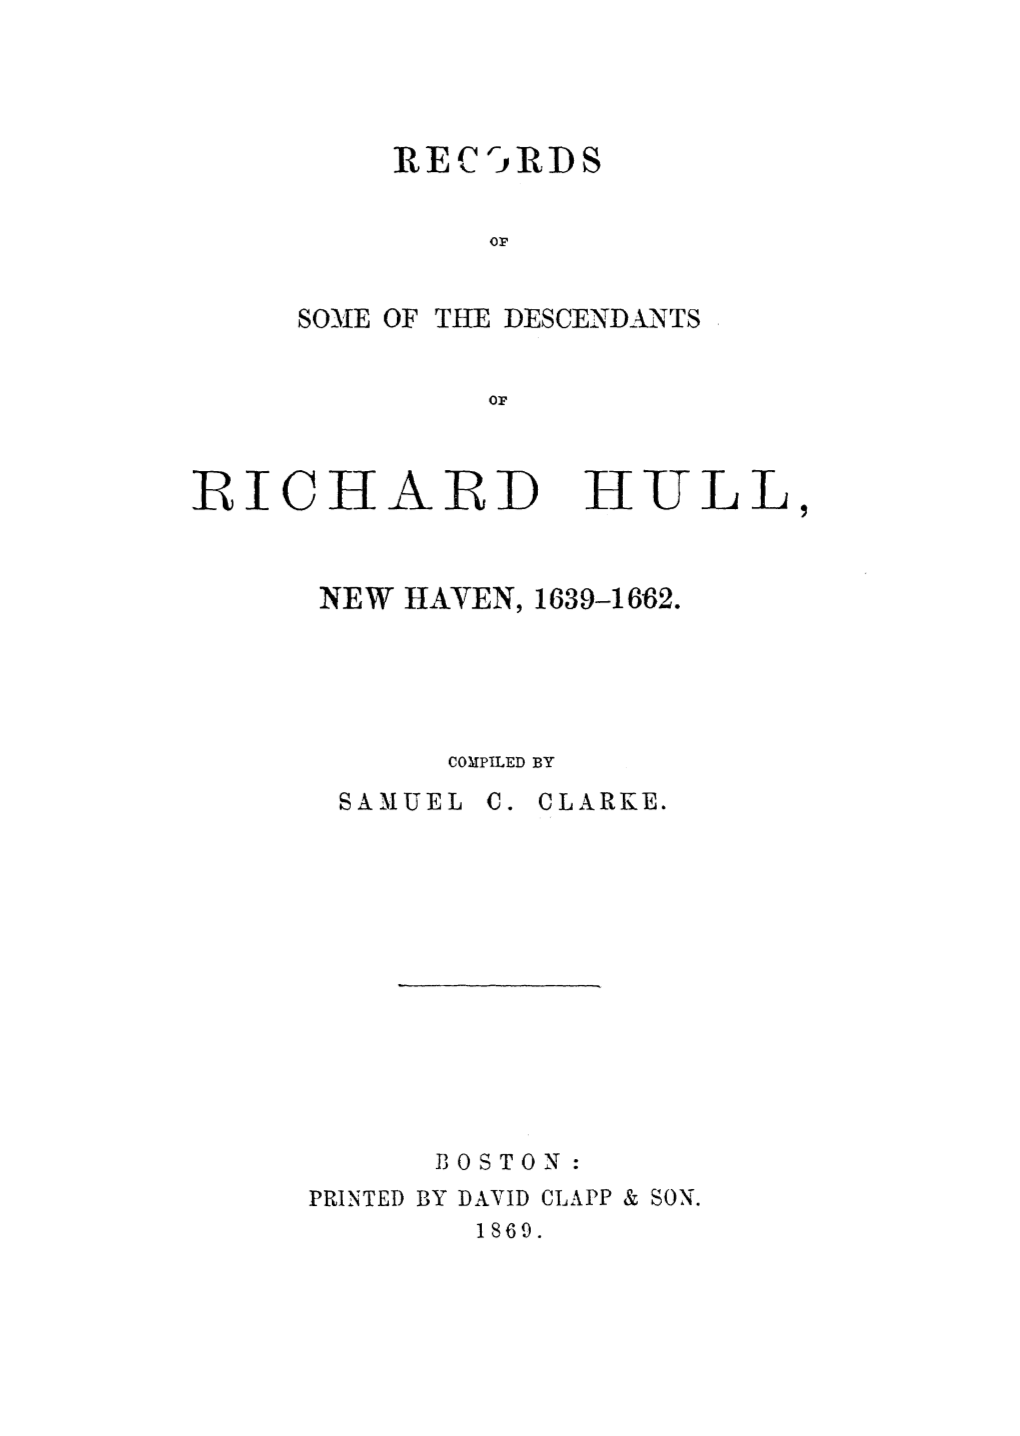 Richard Hull